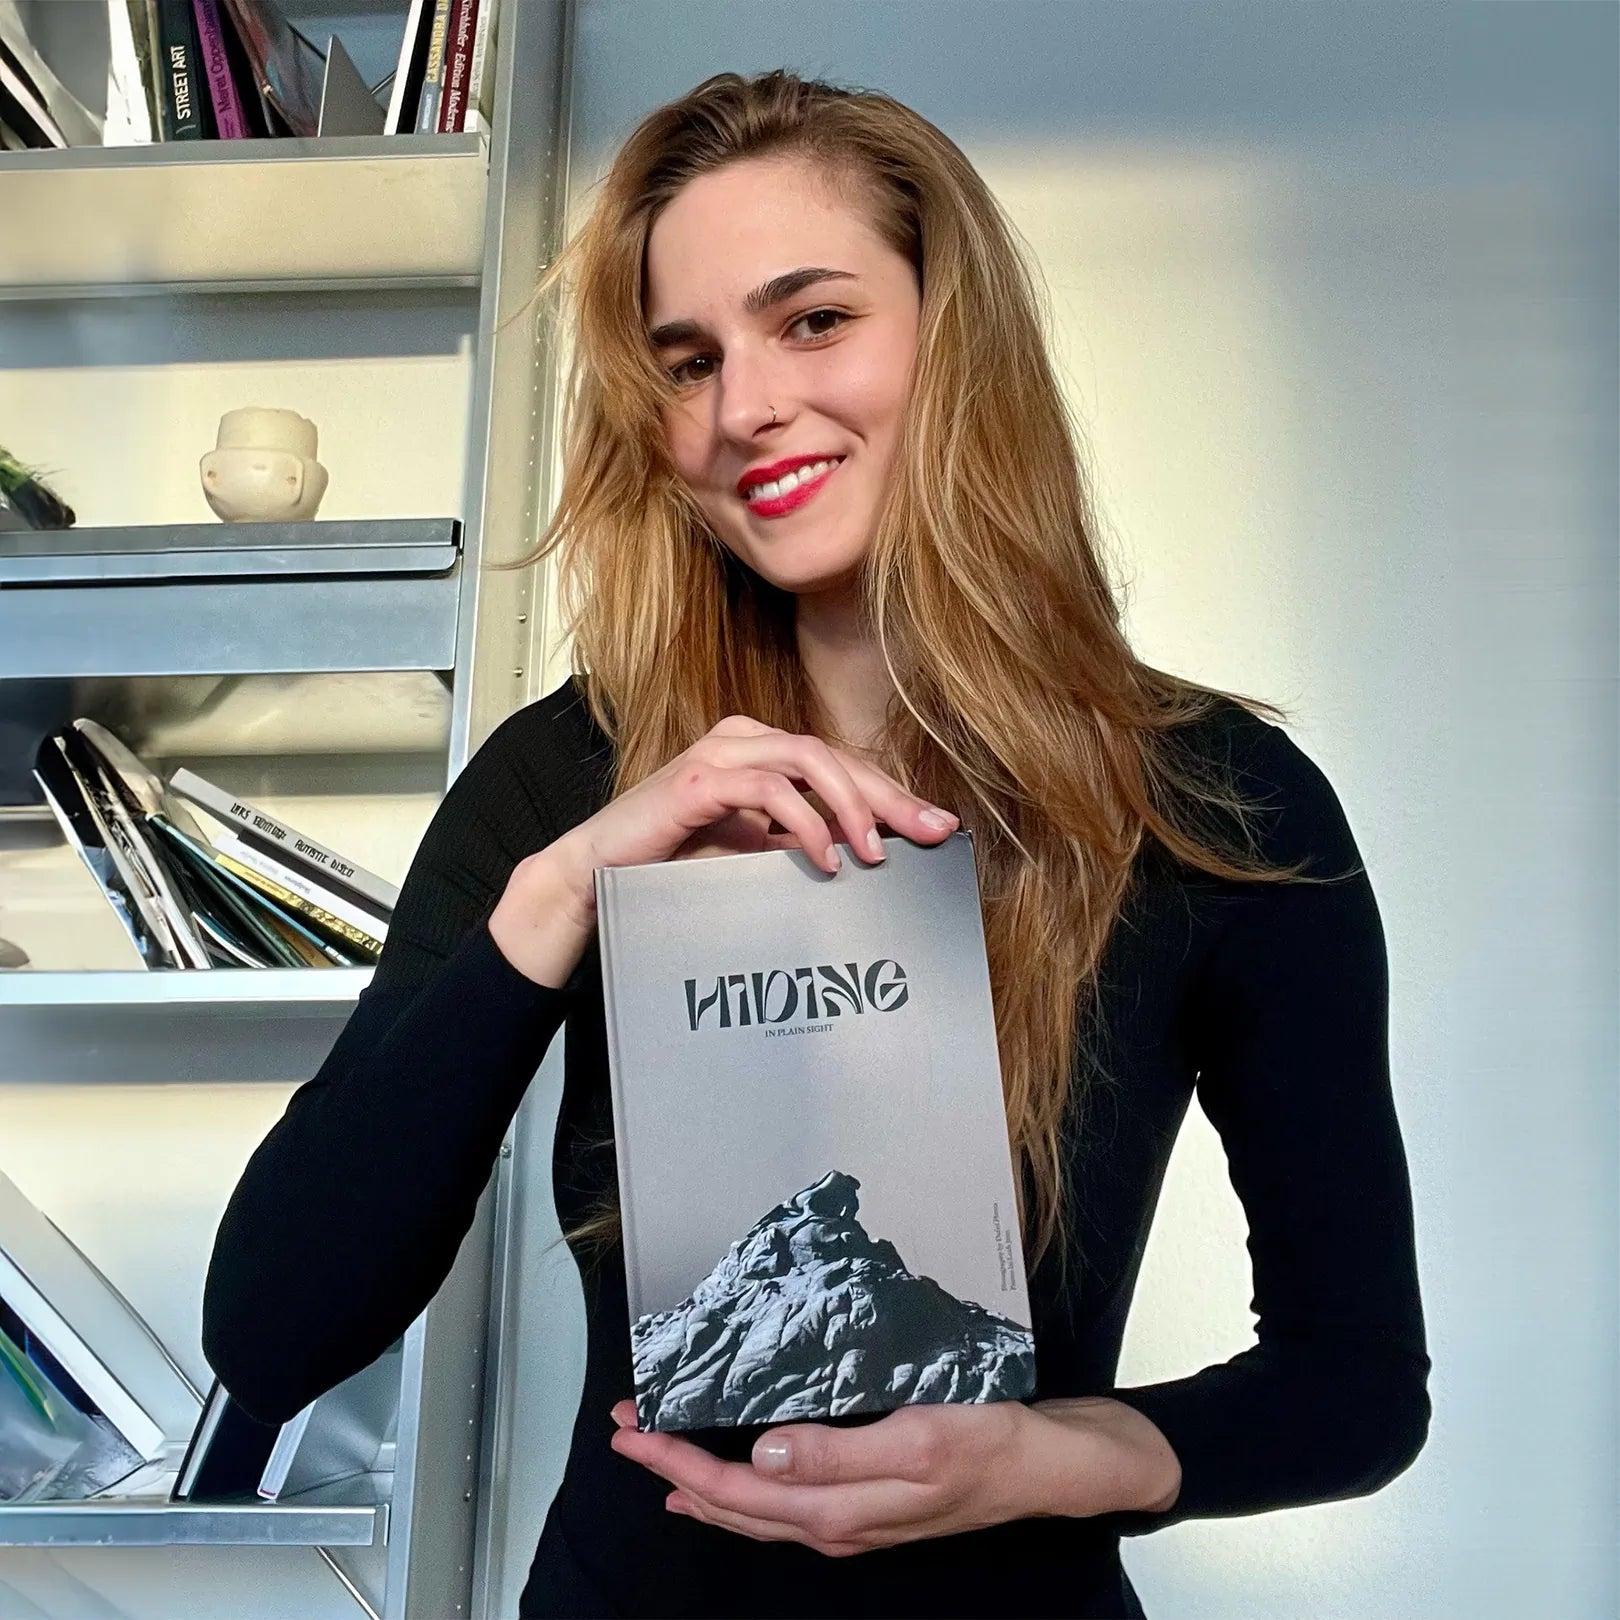 Dafni Planta Holding her Photo Book Hiding in plain sight